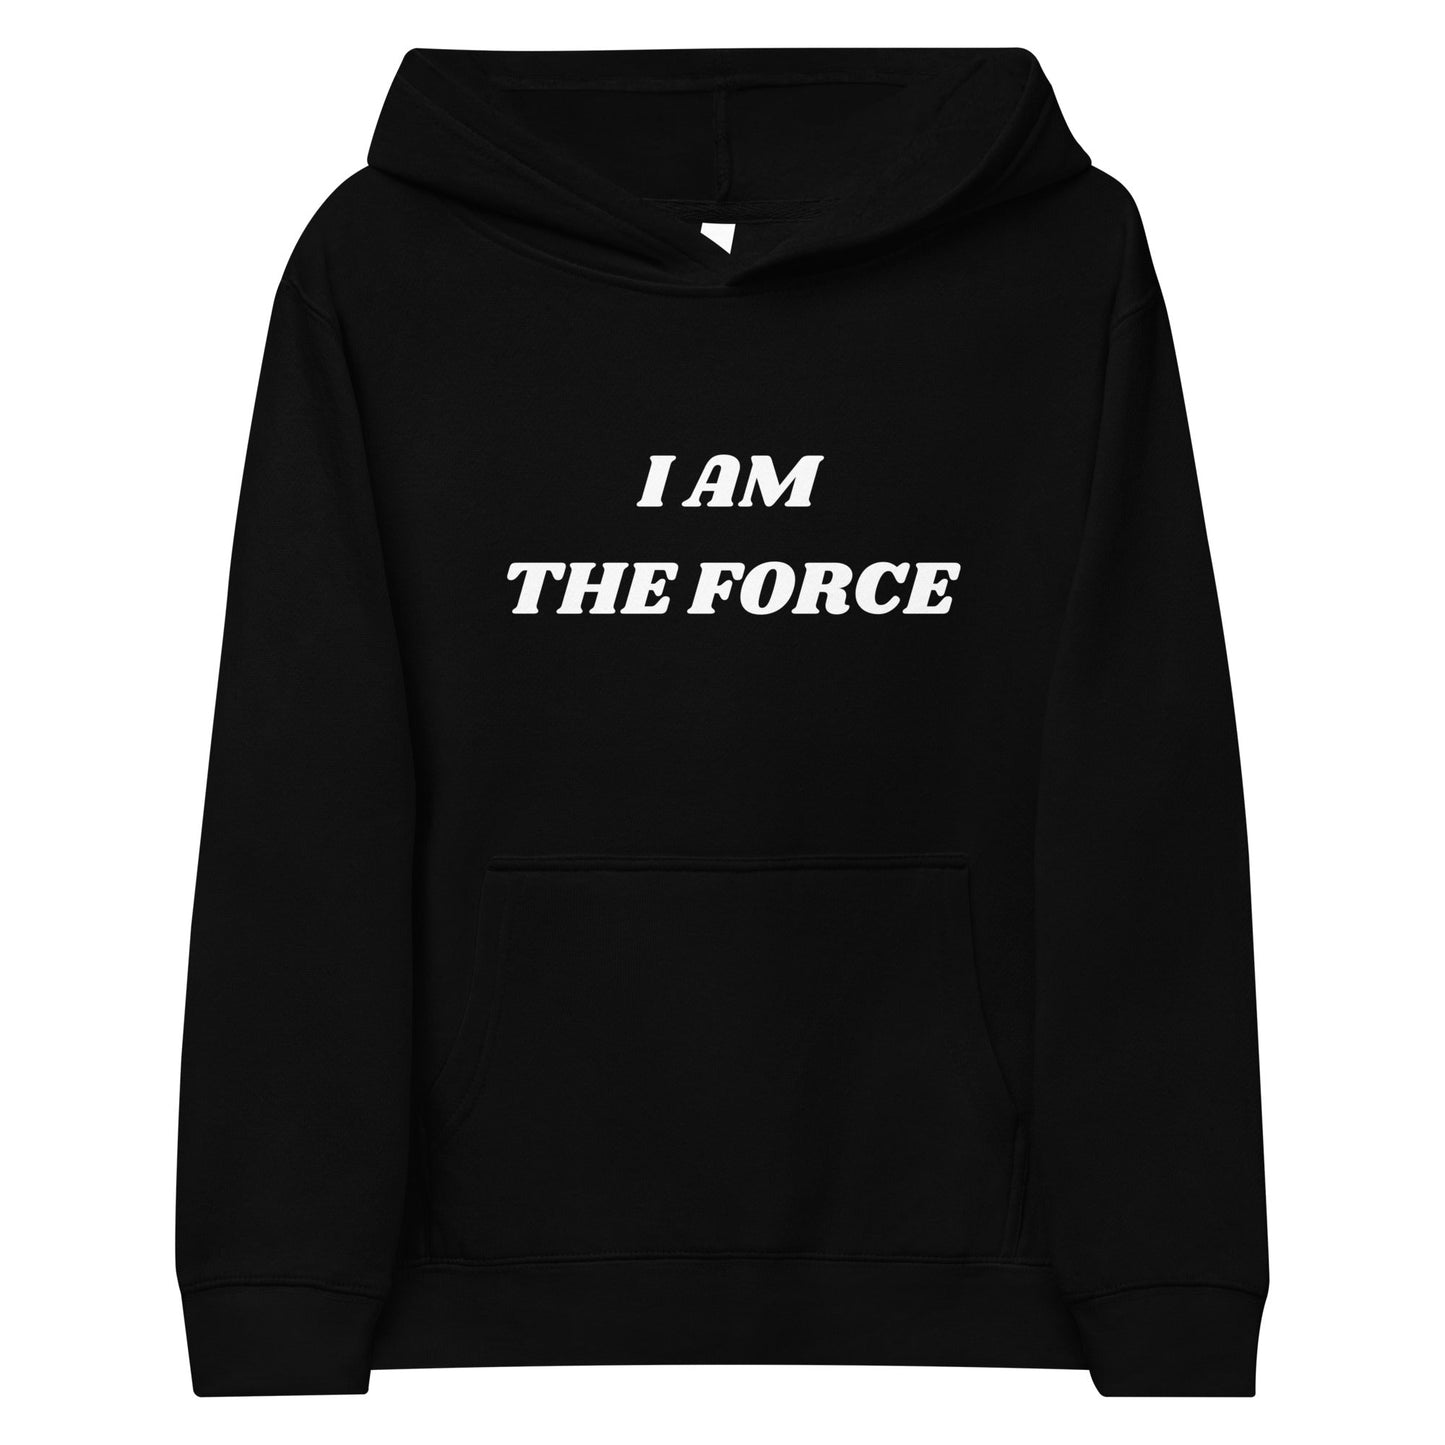 I AM THE FORCE | Kids fleece hoodie